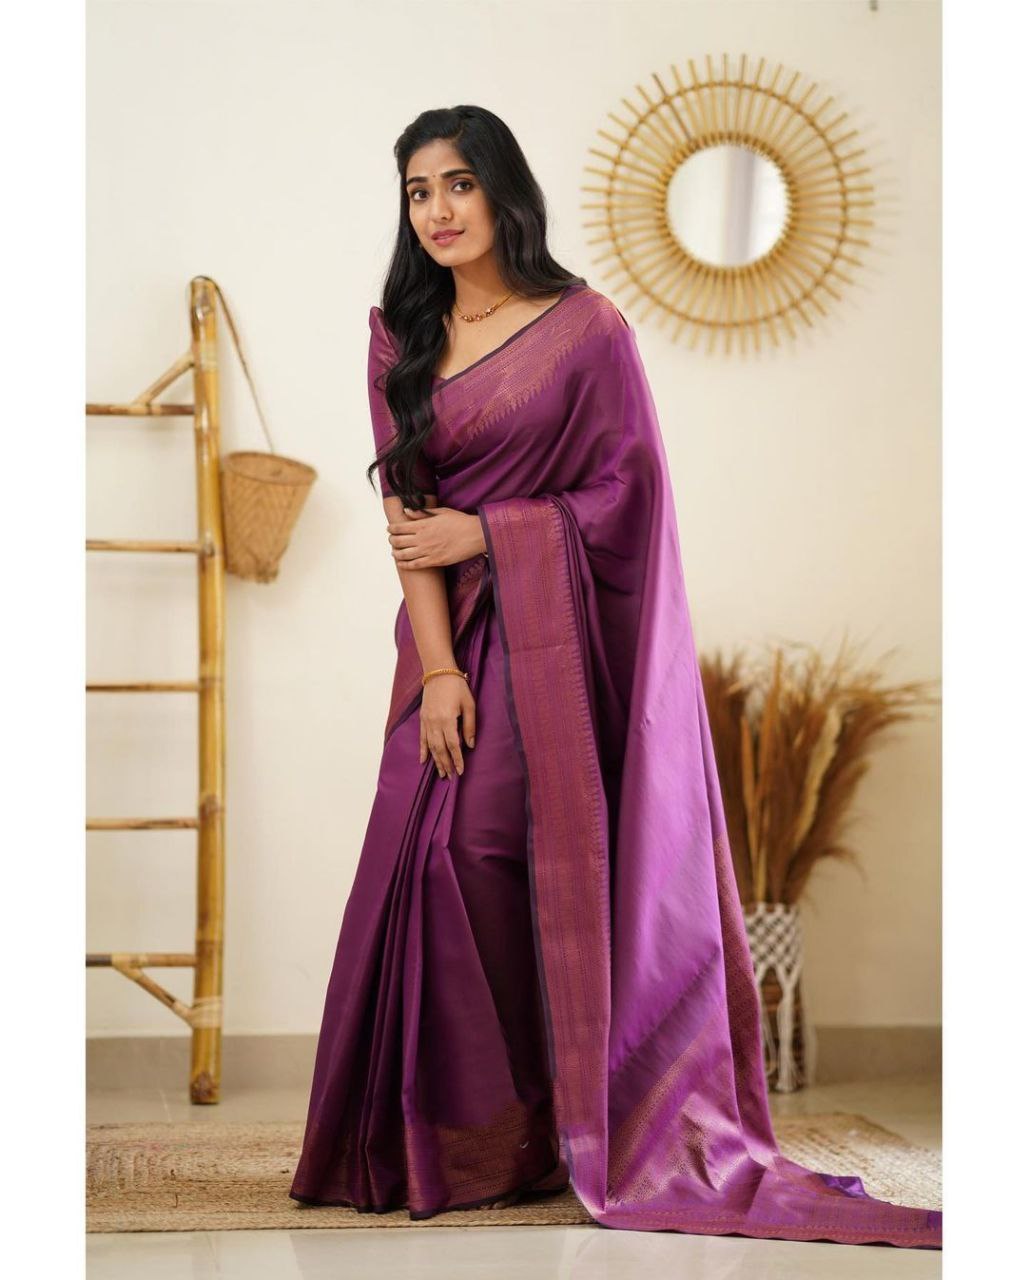  Kanjivarm sari for women